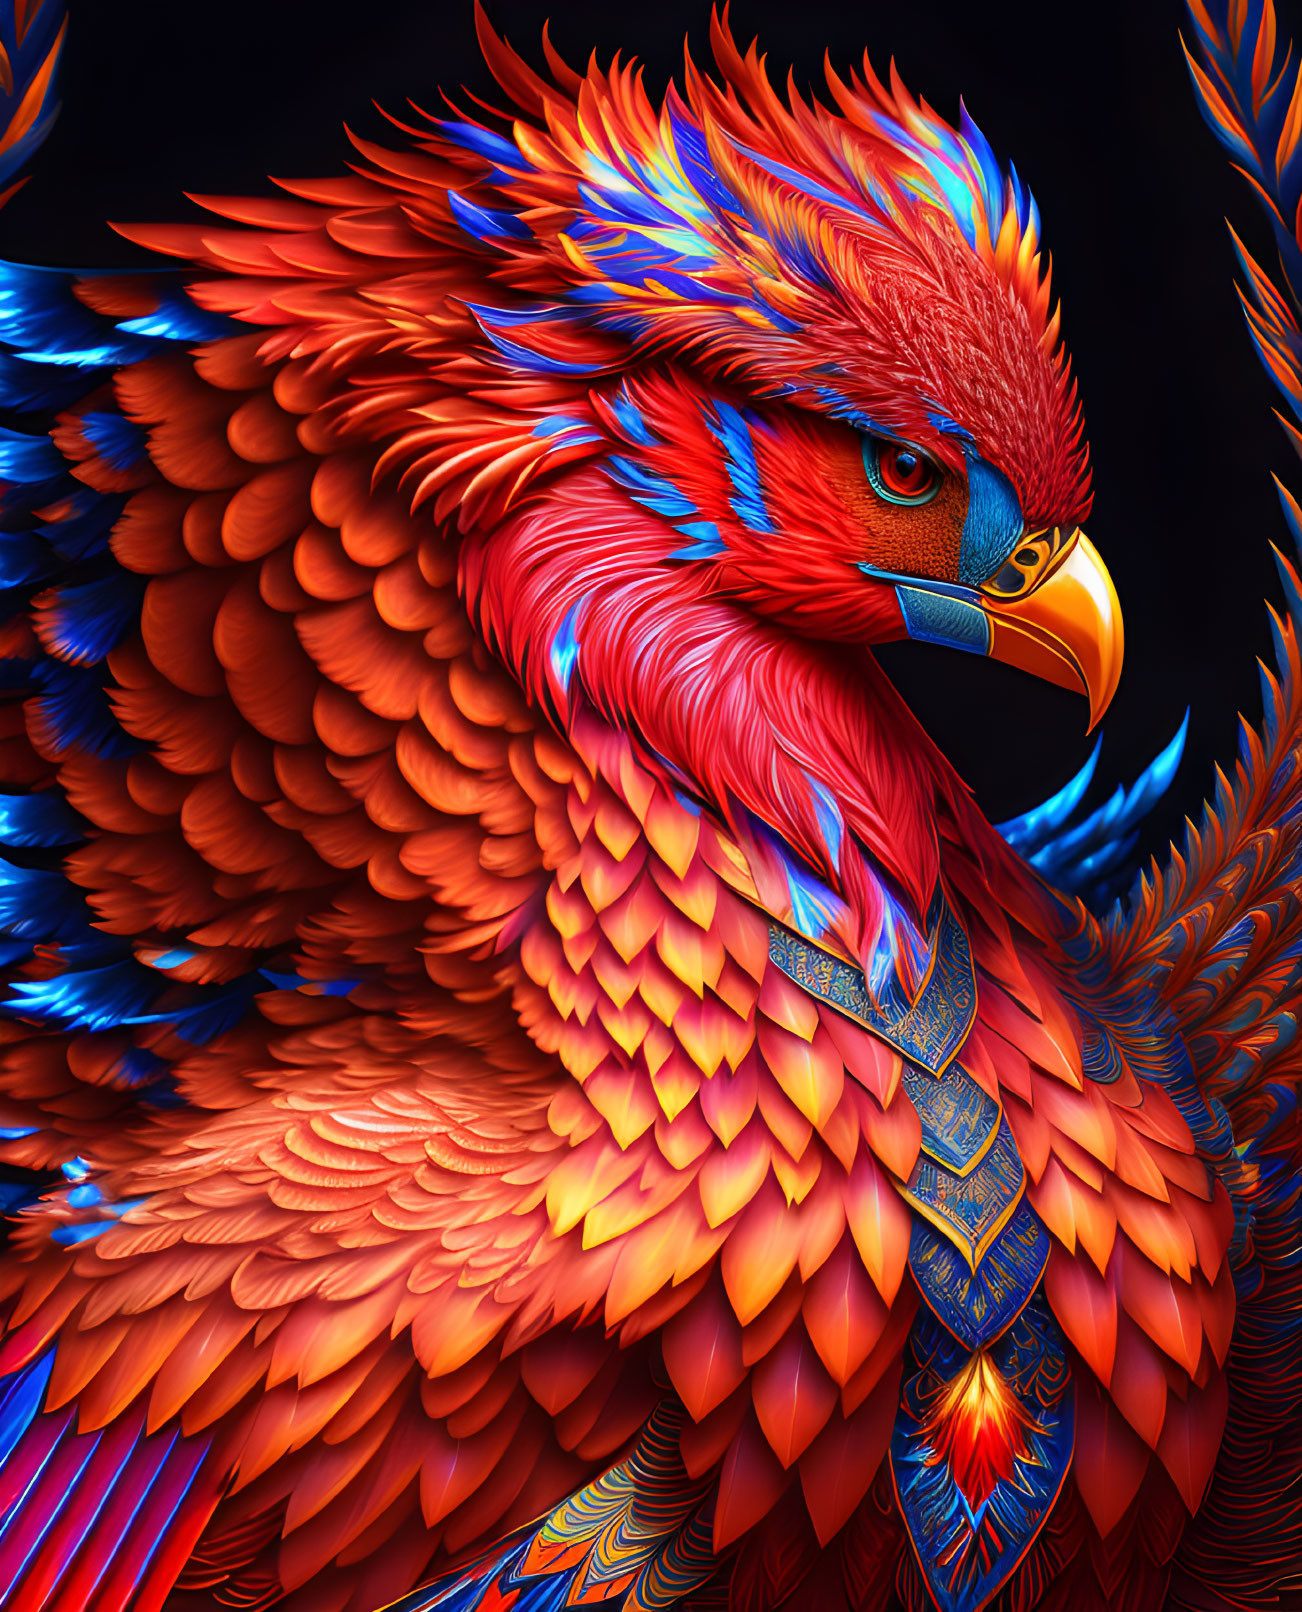 The Phoenix Bird, version number 3